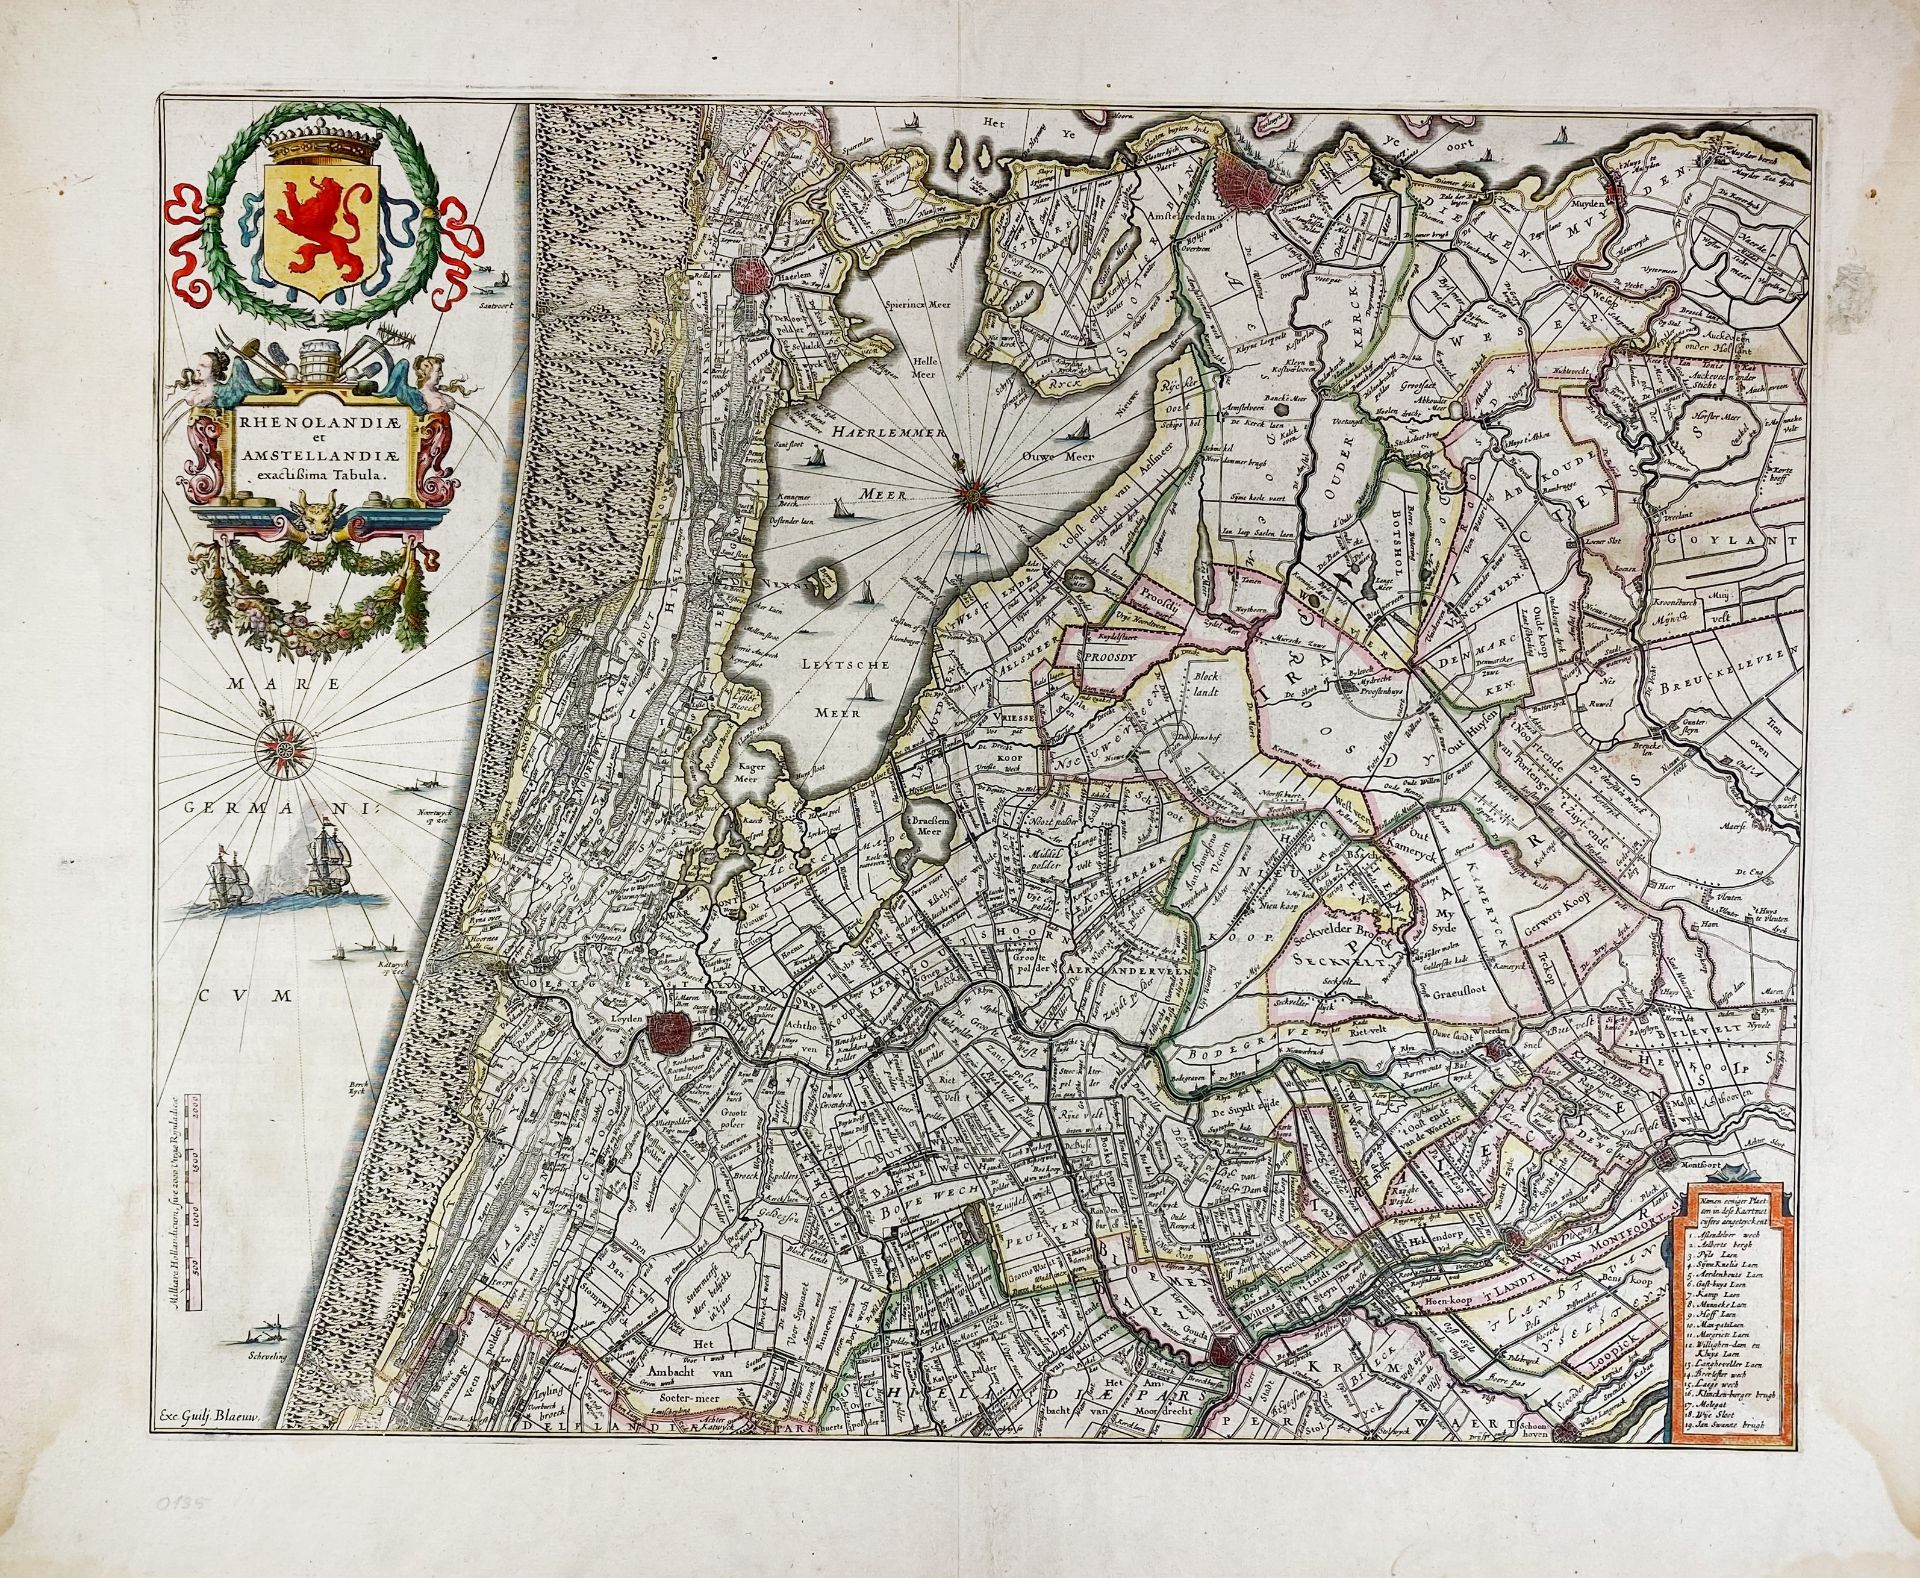 LOW COUNTRIES -- "RHENOLANDIÆ et AMSTELLANDIÆ exactissima Tabula". (Amst.,) G. Blaeu. (c. 1645